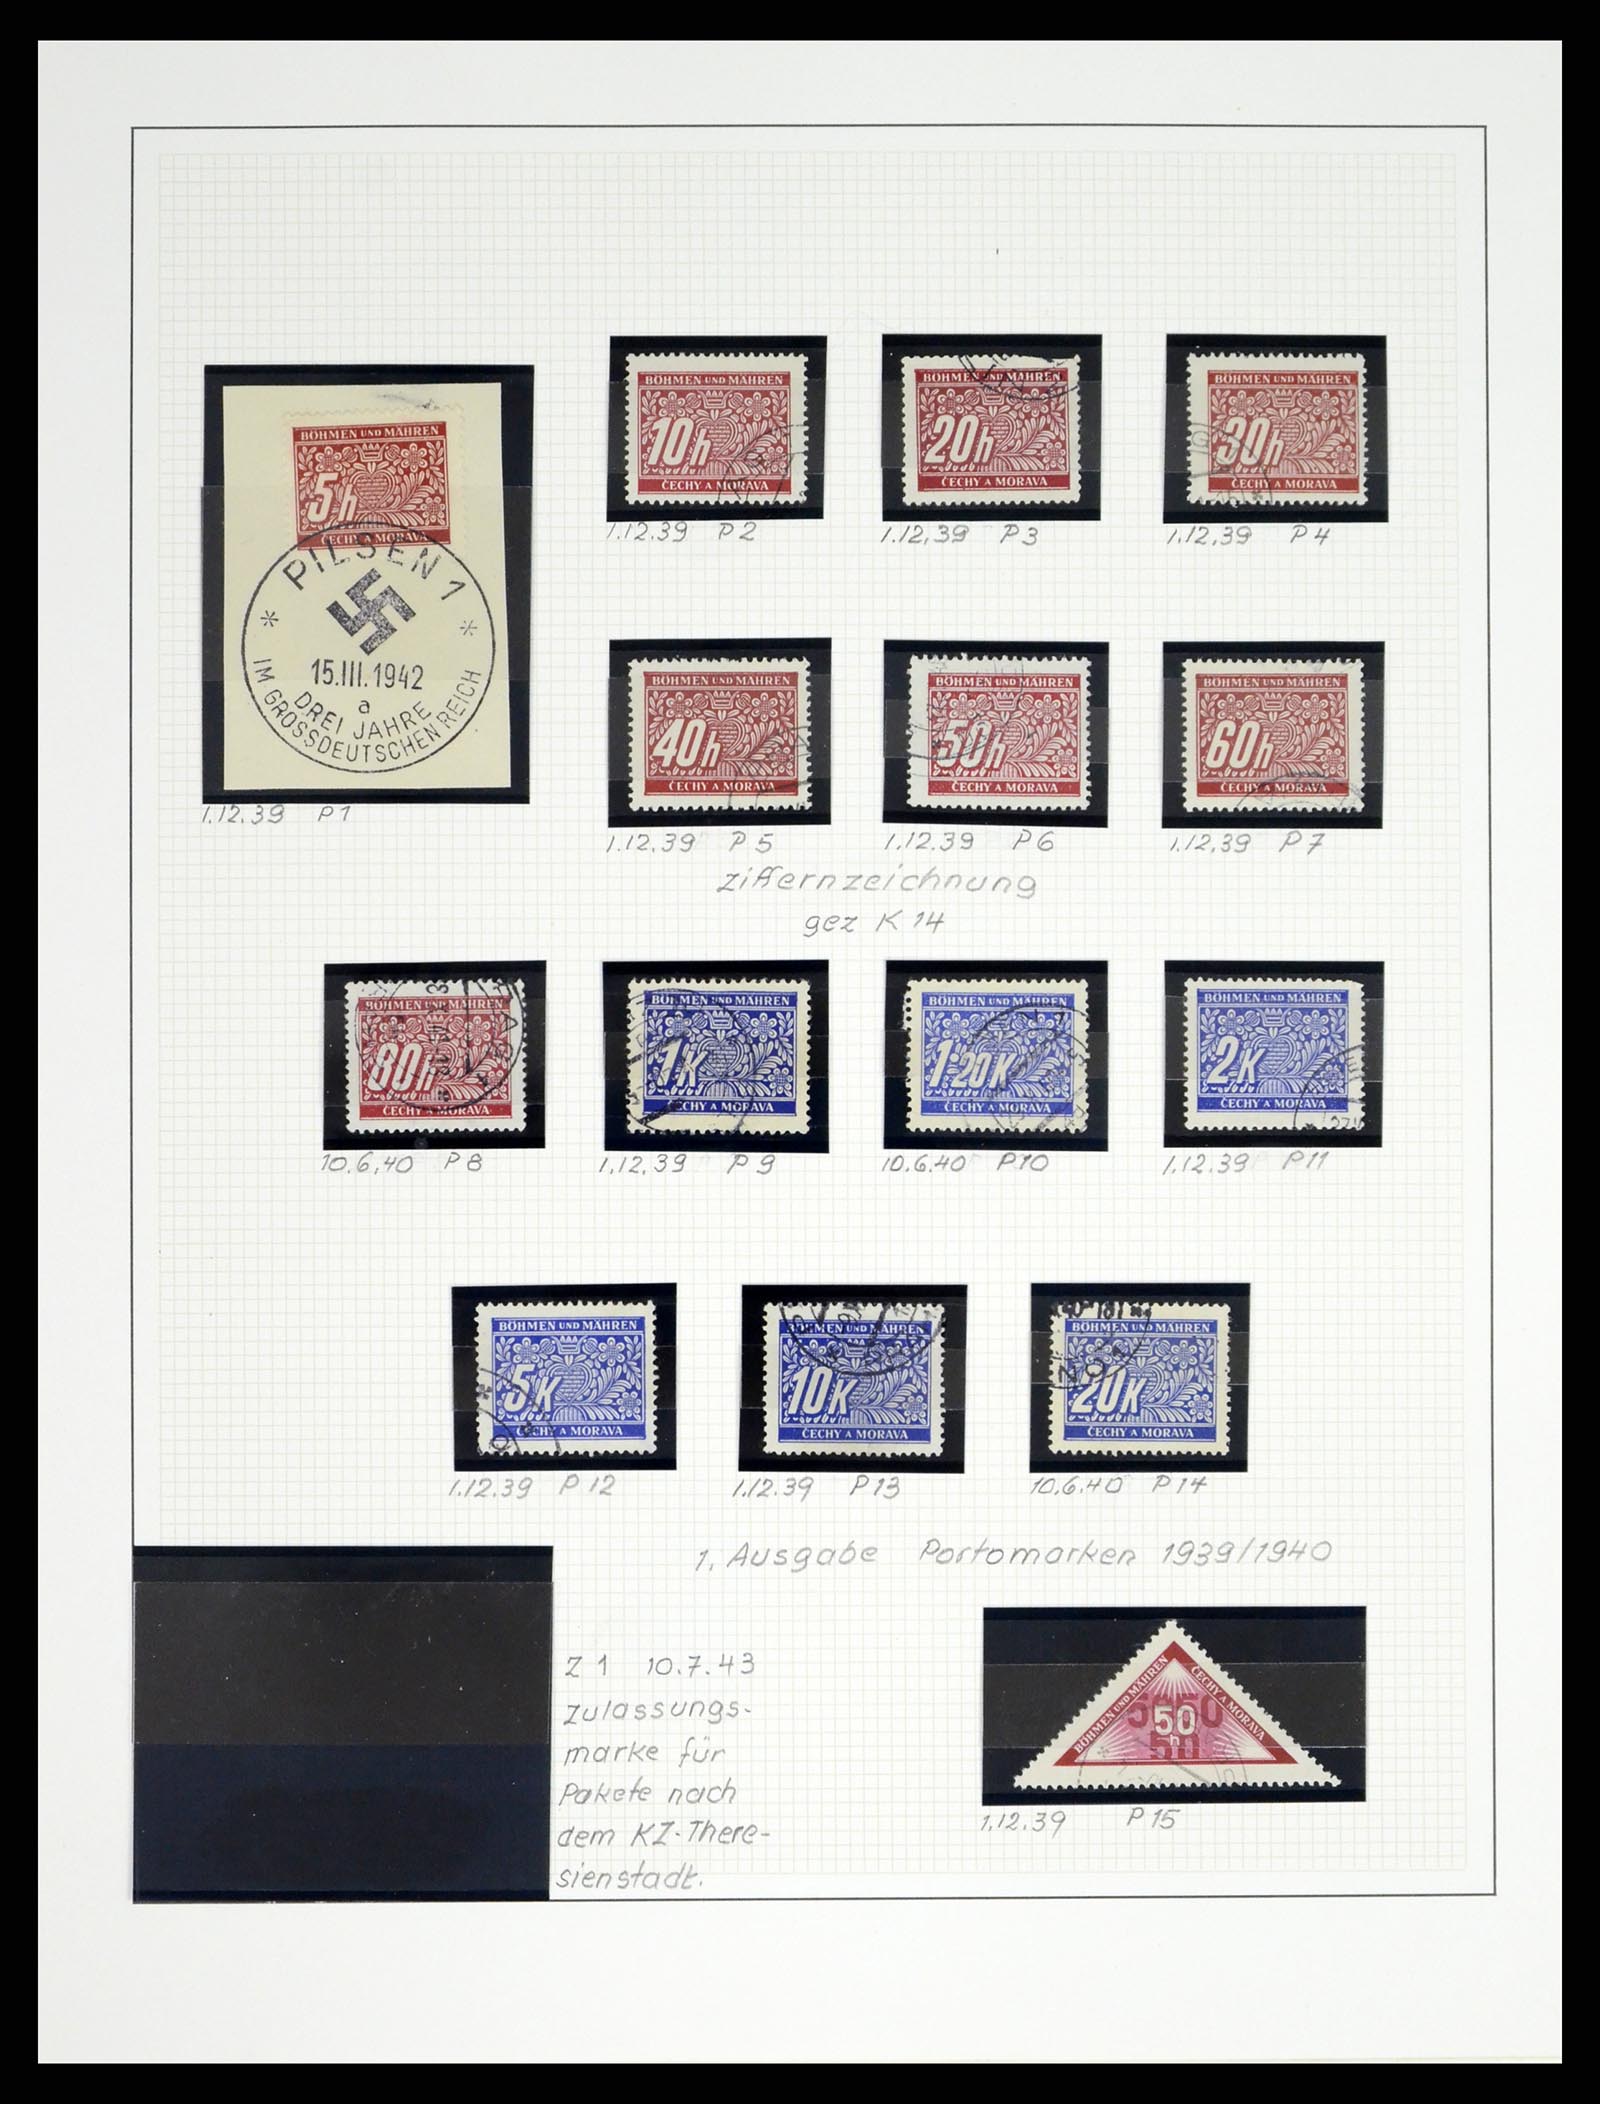 37535 161 - Stamp collection 37535 German occupation second worldwar 1939-1945.